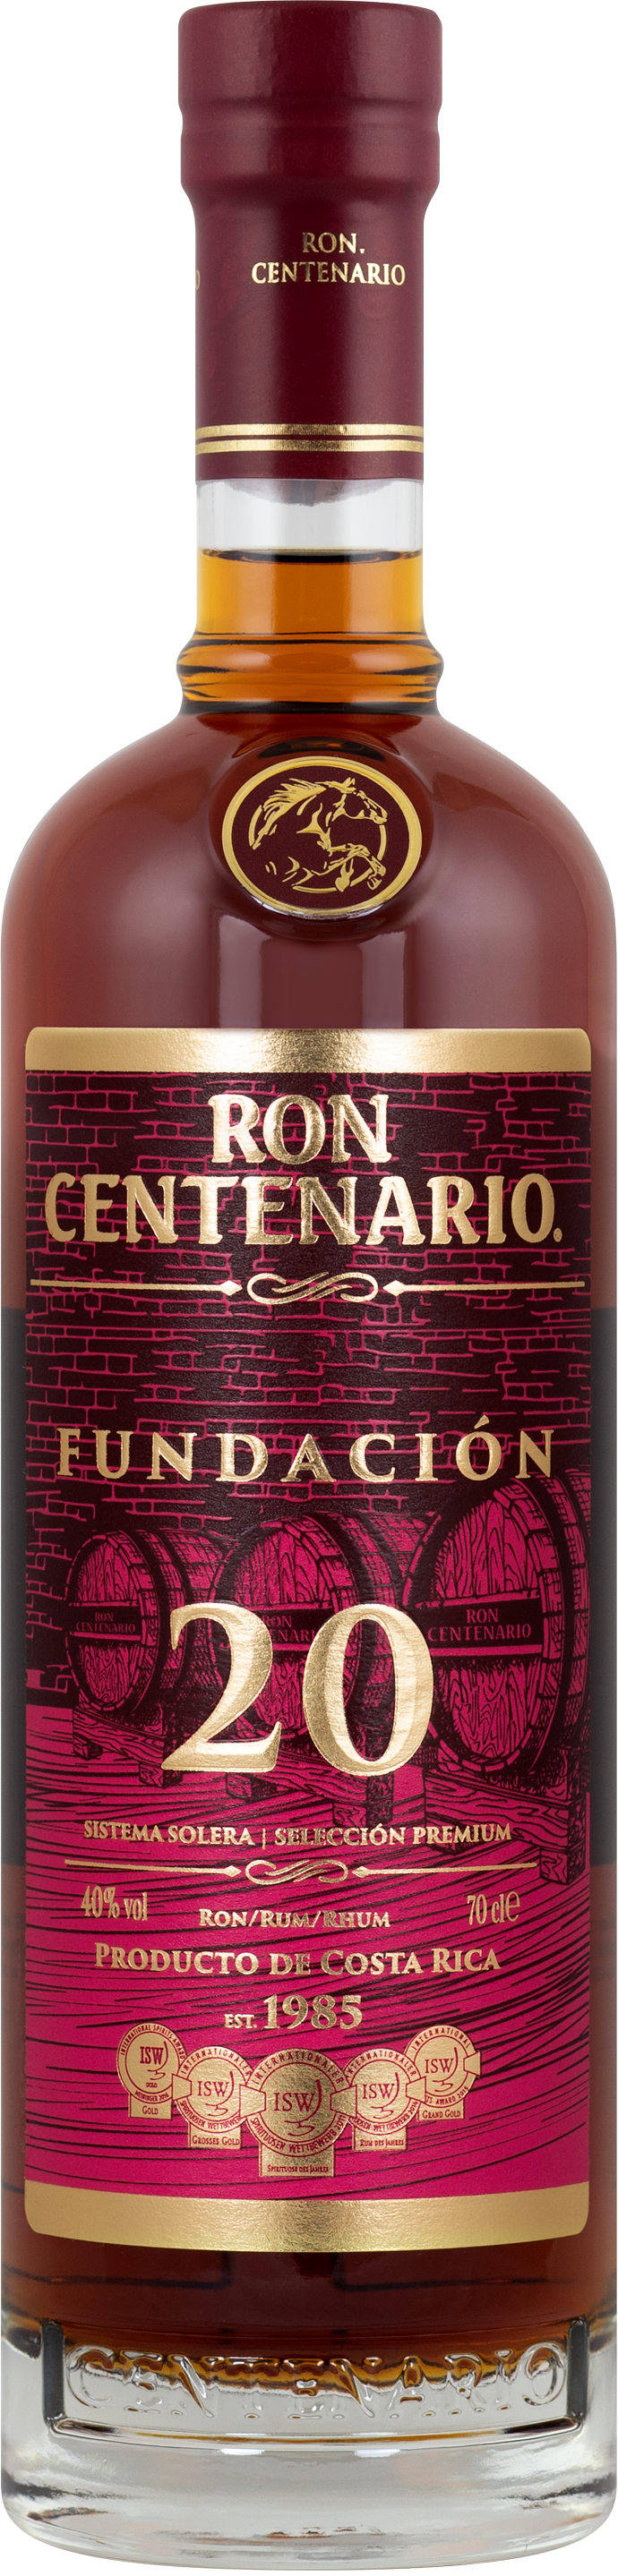 Ron Centenario 20 Aniversario - 0.7L Flasche - TRY IT! Tastings